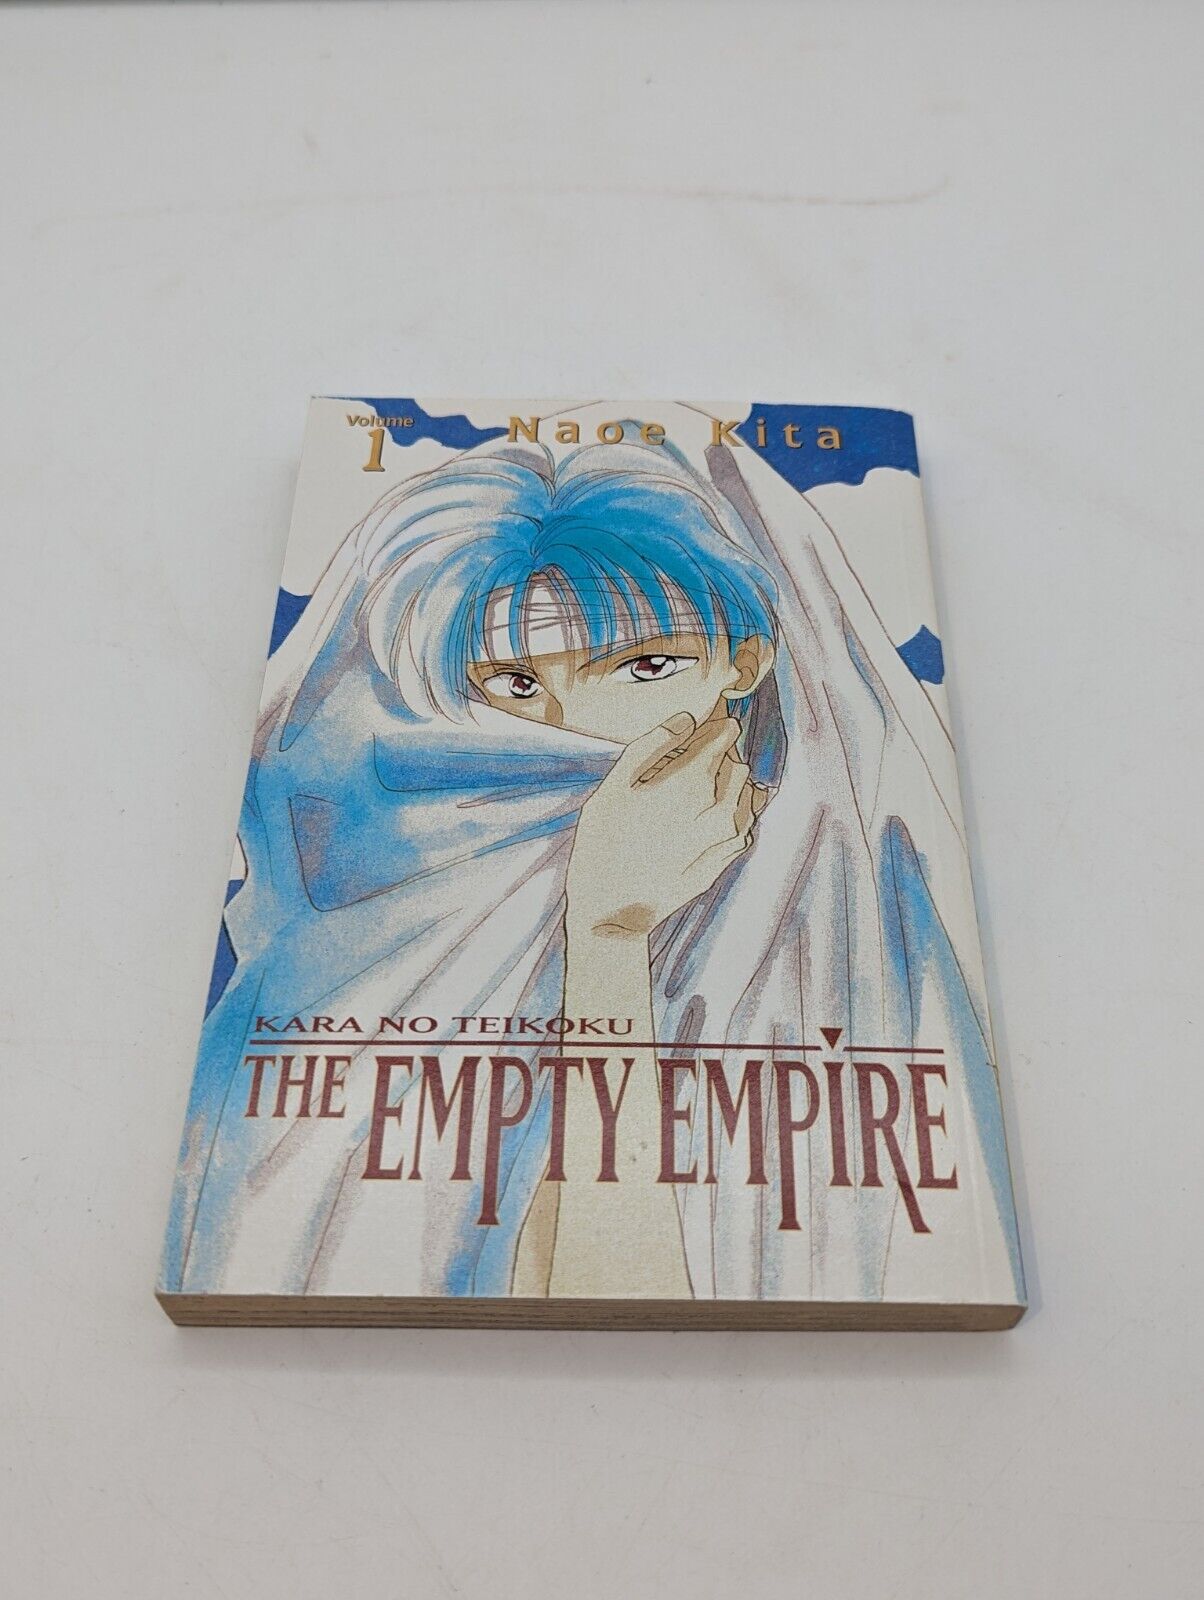 The Empty Empire Volume 1 Manga Naoe Kita Kara No Teikoku CMX DC Comics